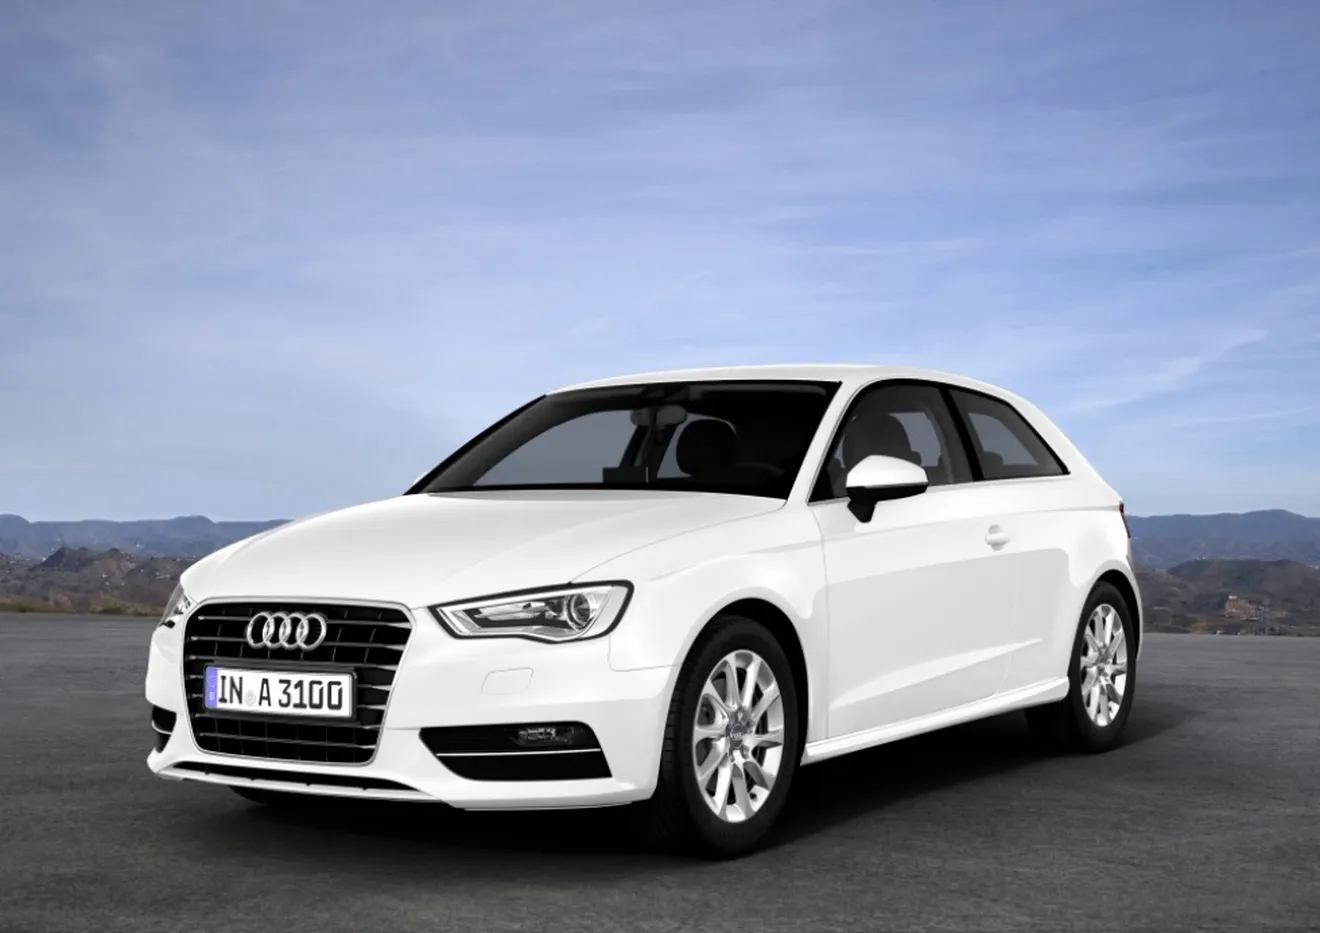 Audi A3 1.4 TFSI ultra, reducidos consumos también en gasolina